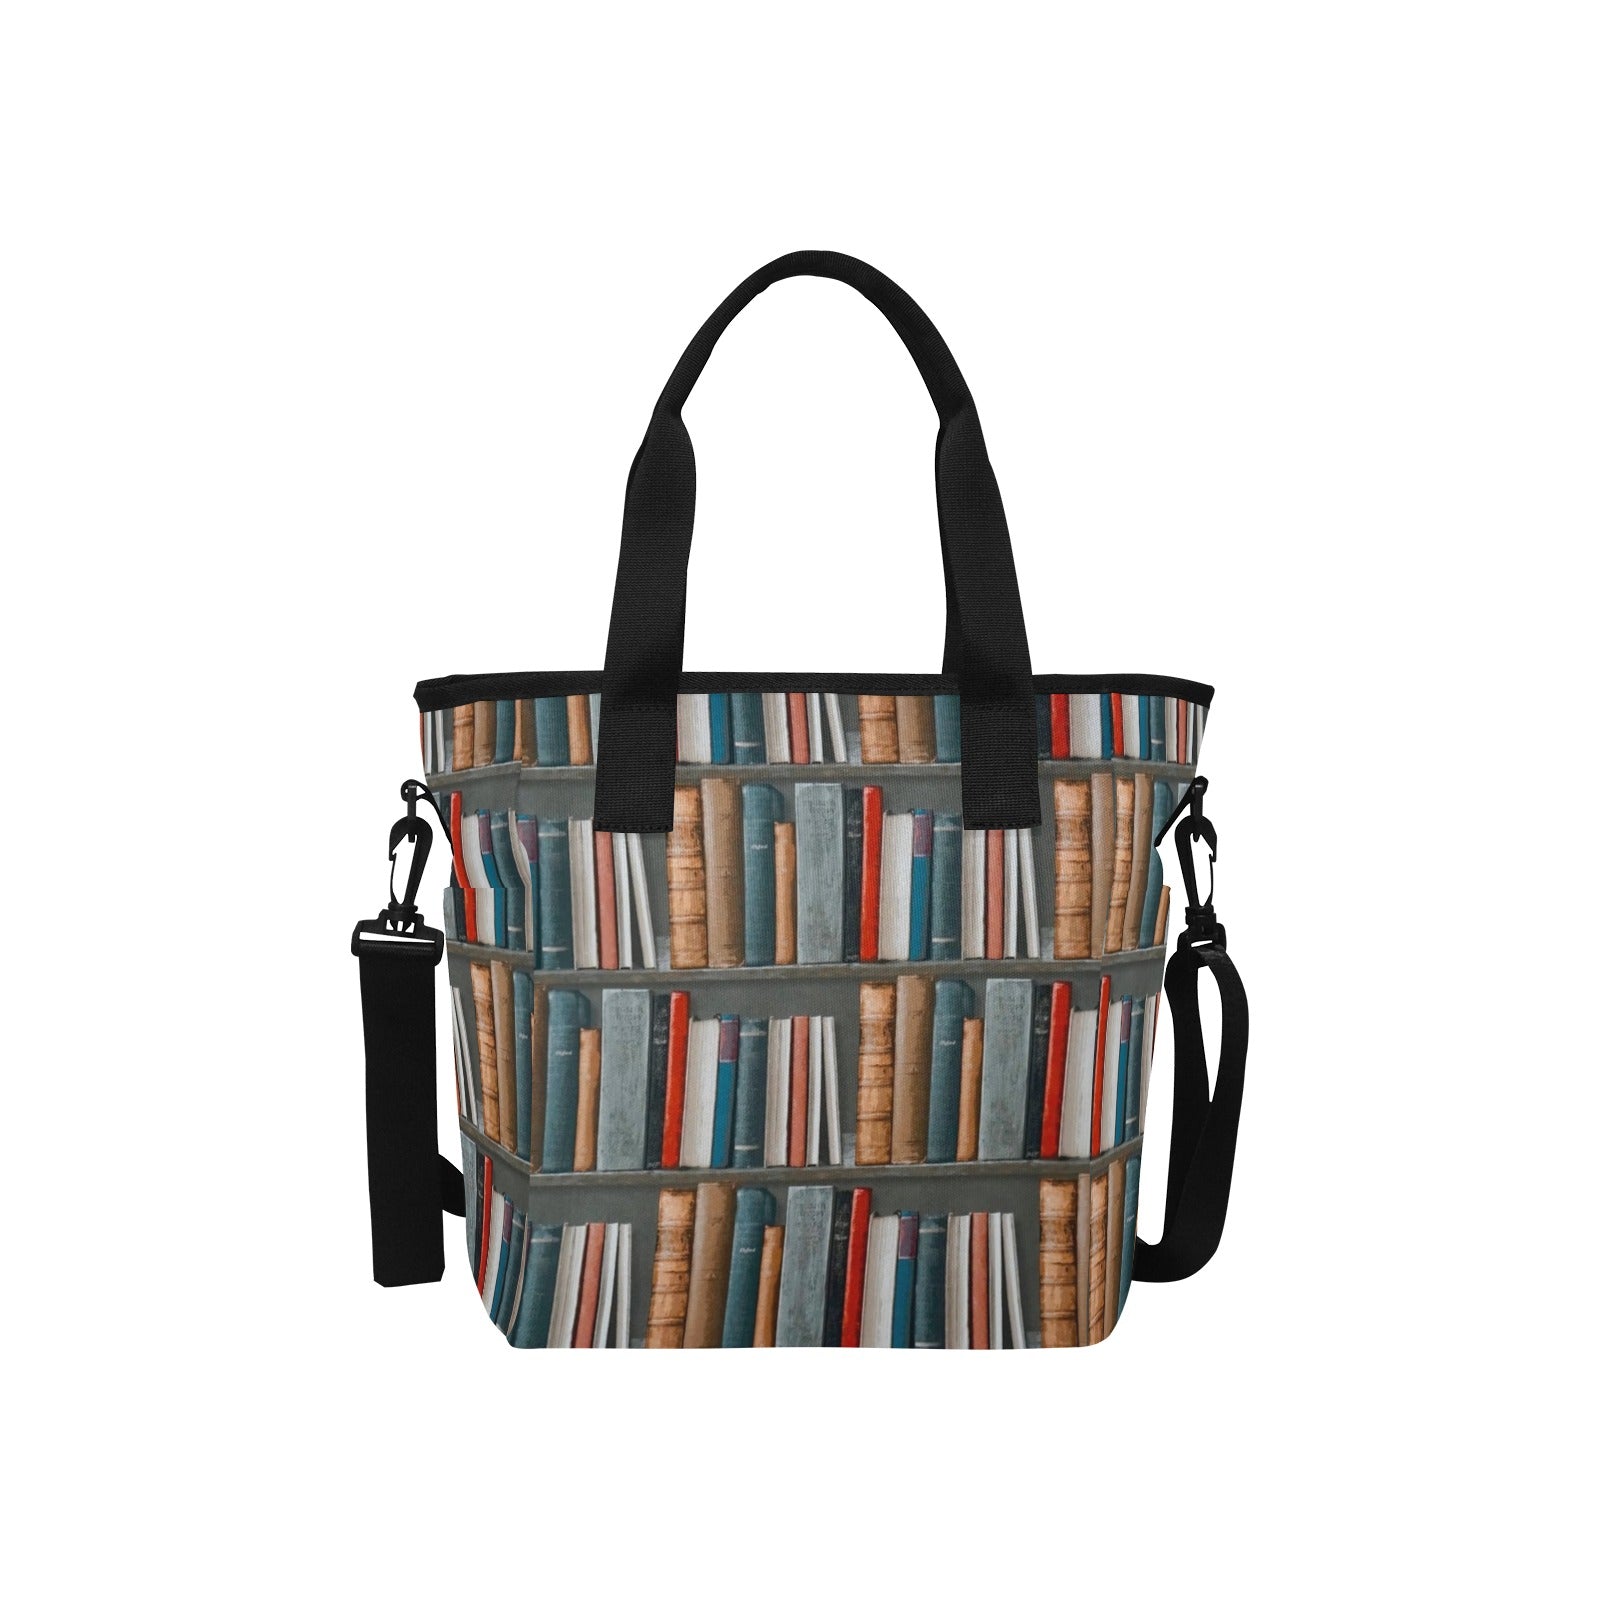 Books - Tote Bag with Shoulder Strap Nylon Tote Bag